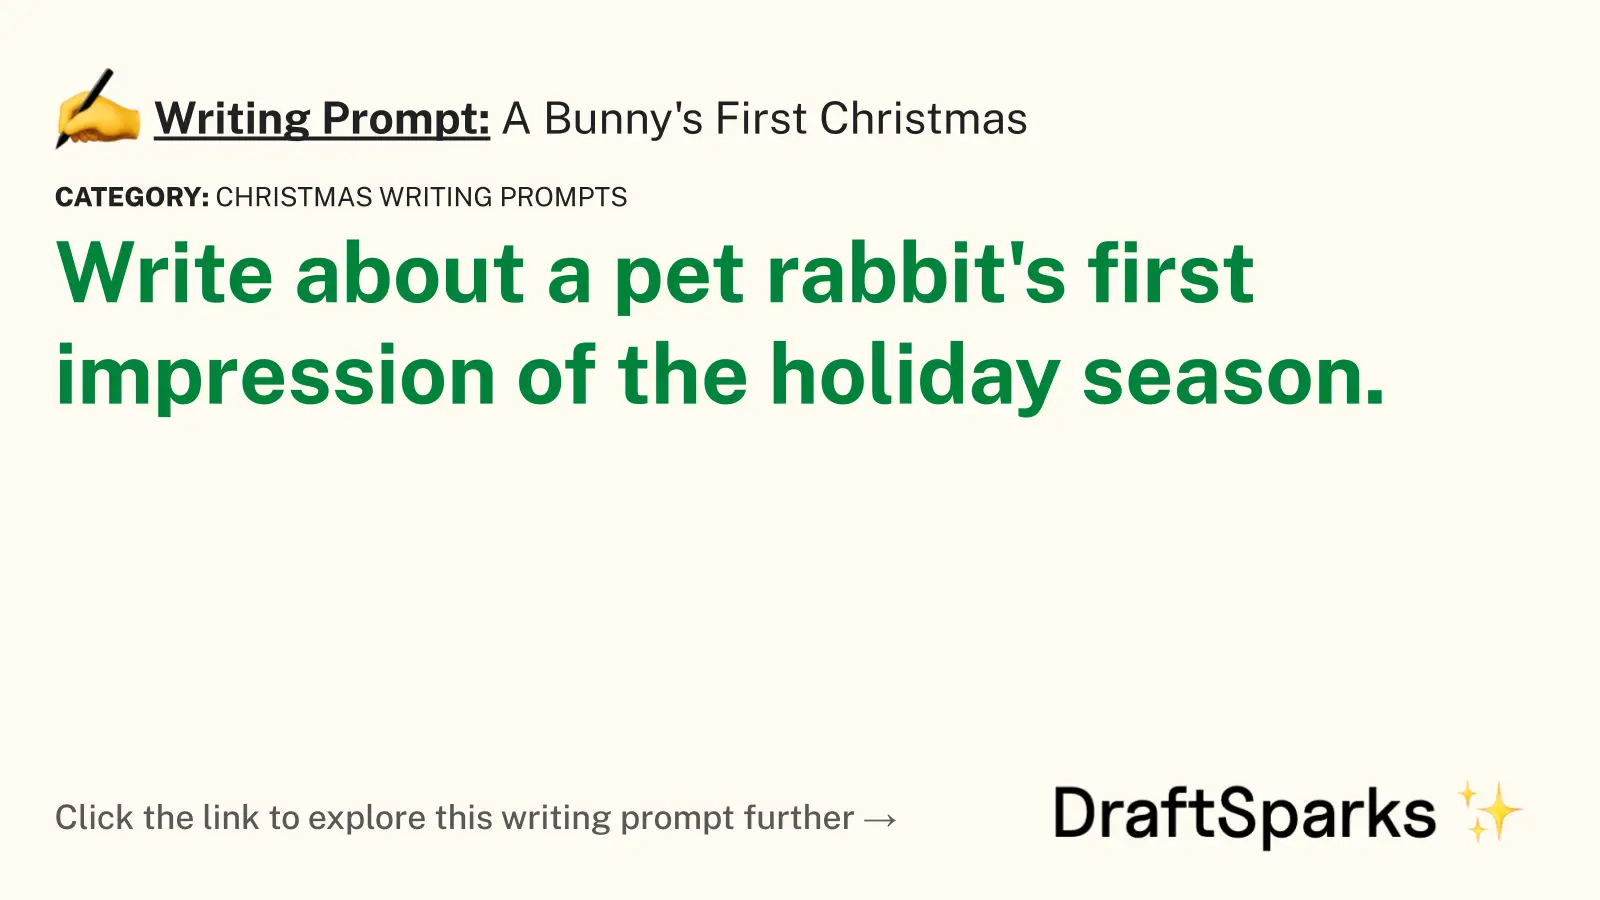 A Bunny’s First Christmas